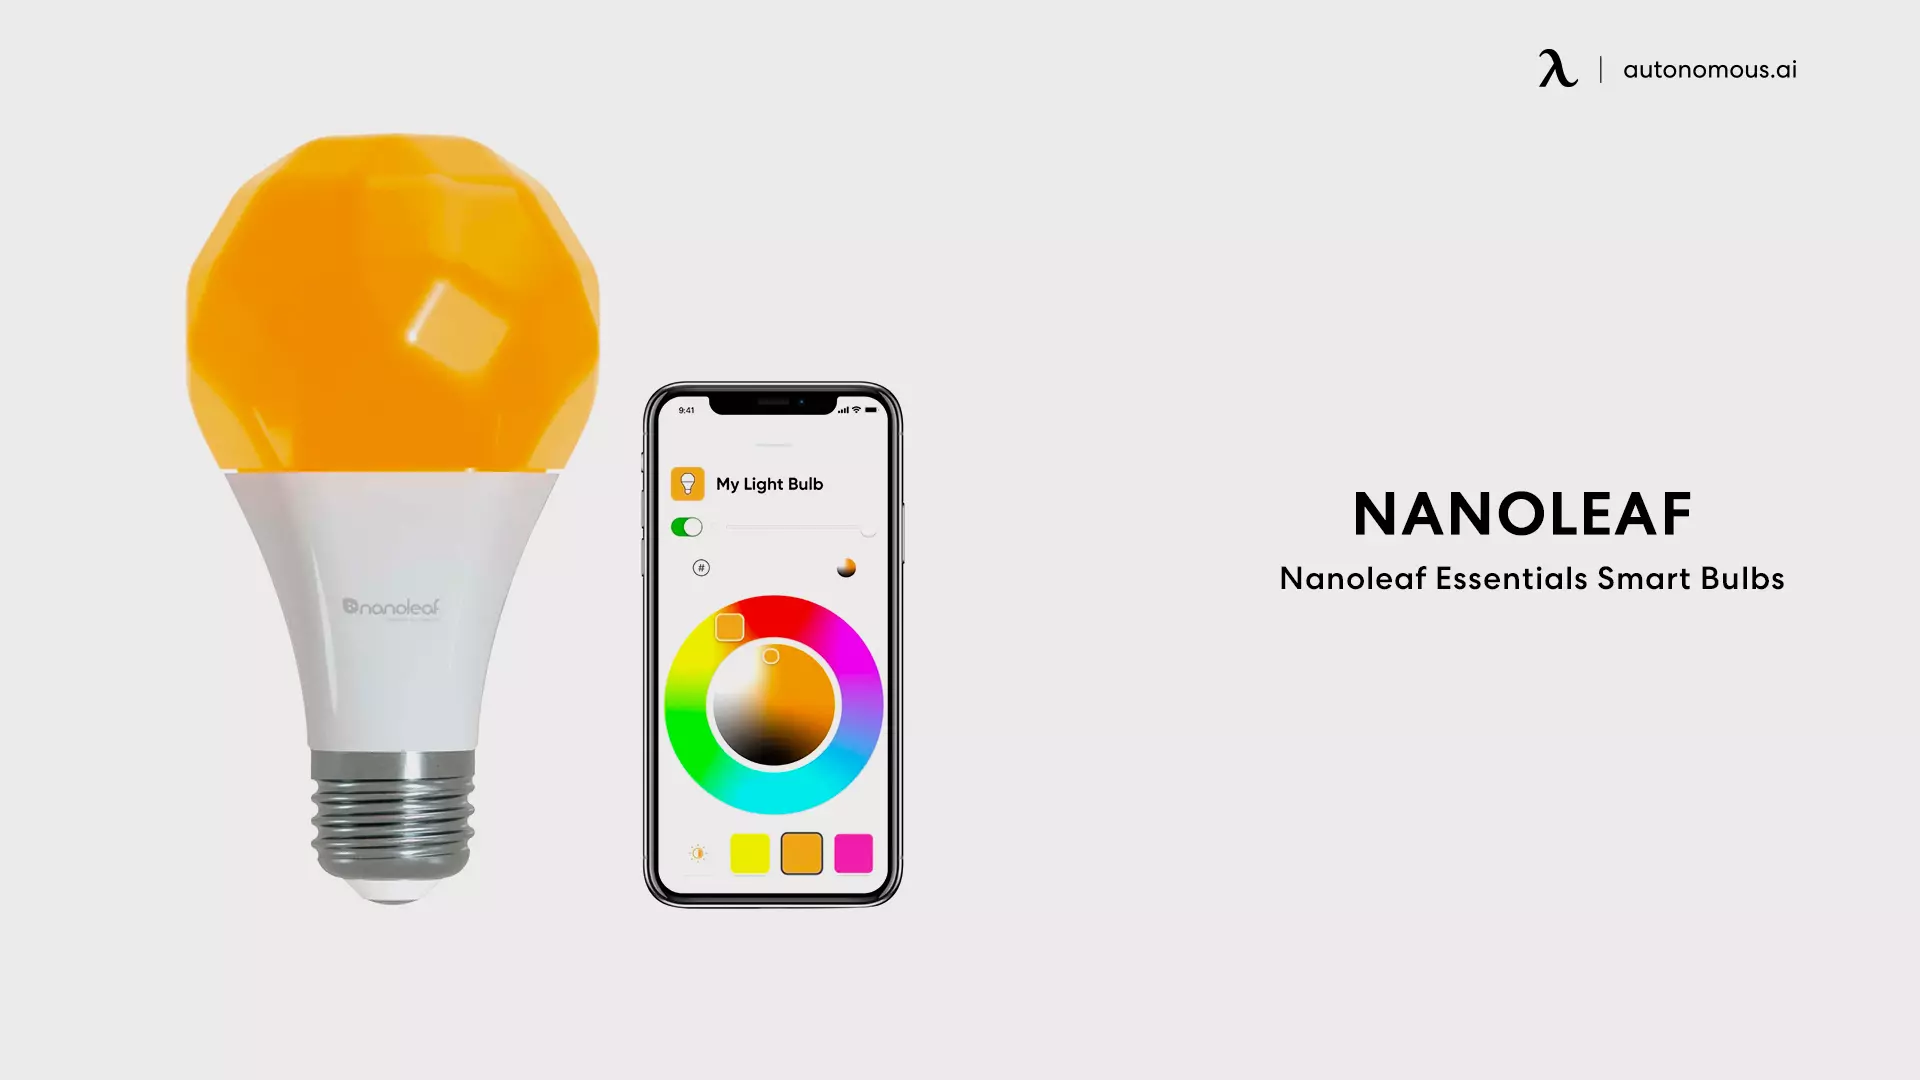 Nanoleaf Essentials Smart Bulbs